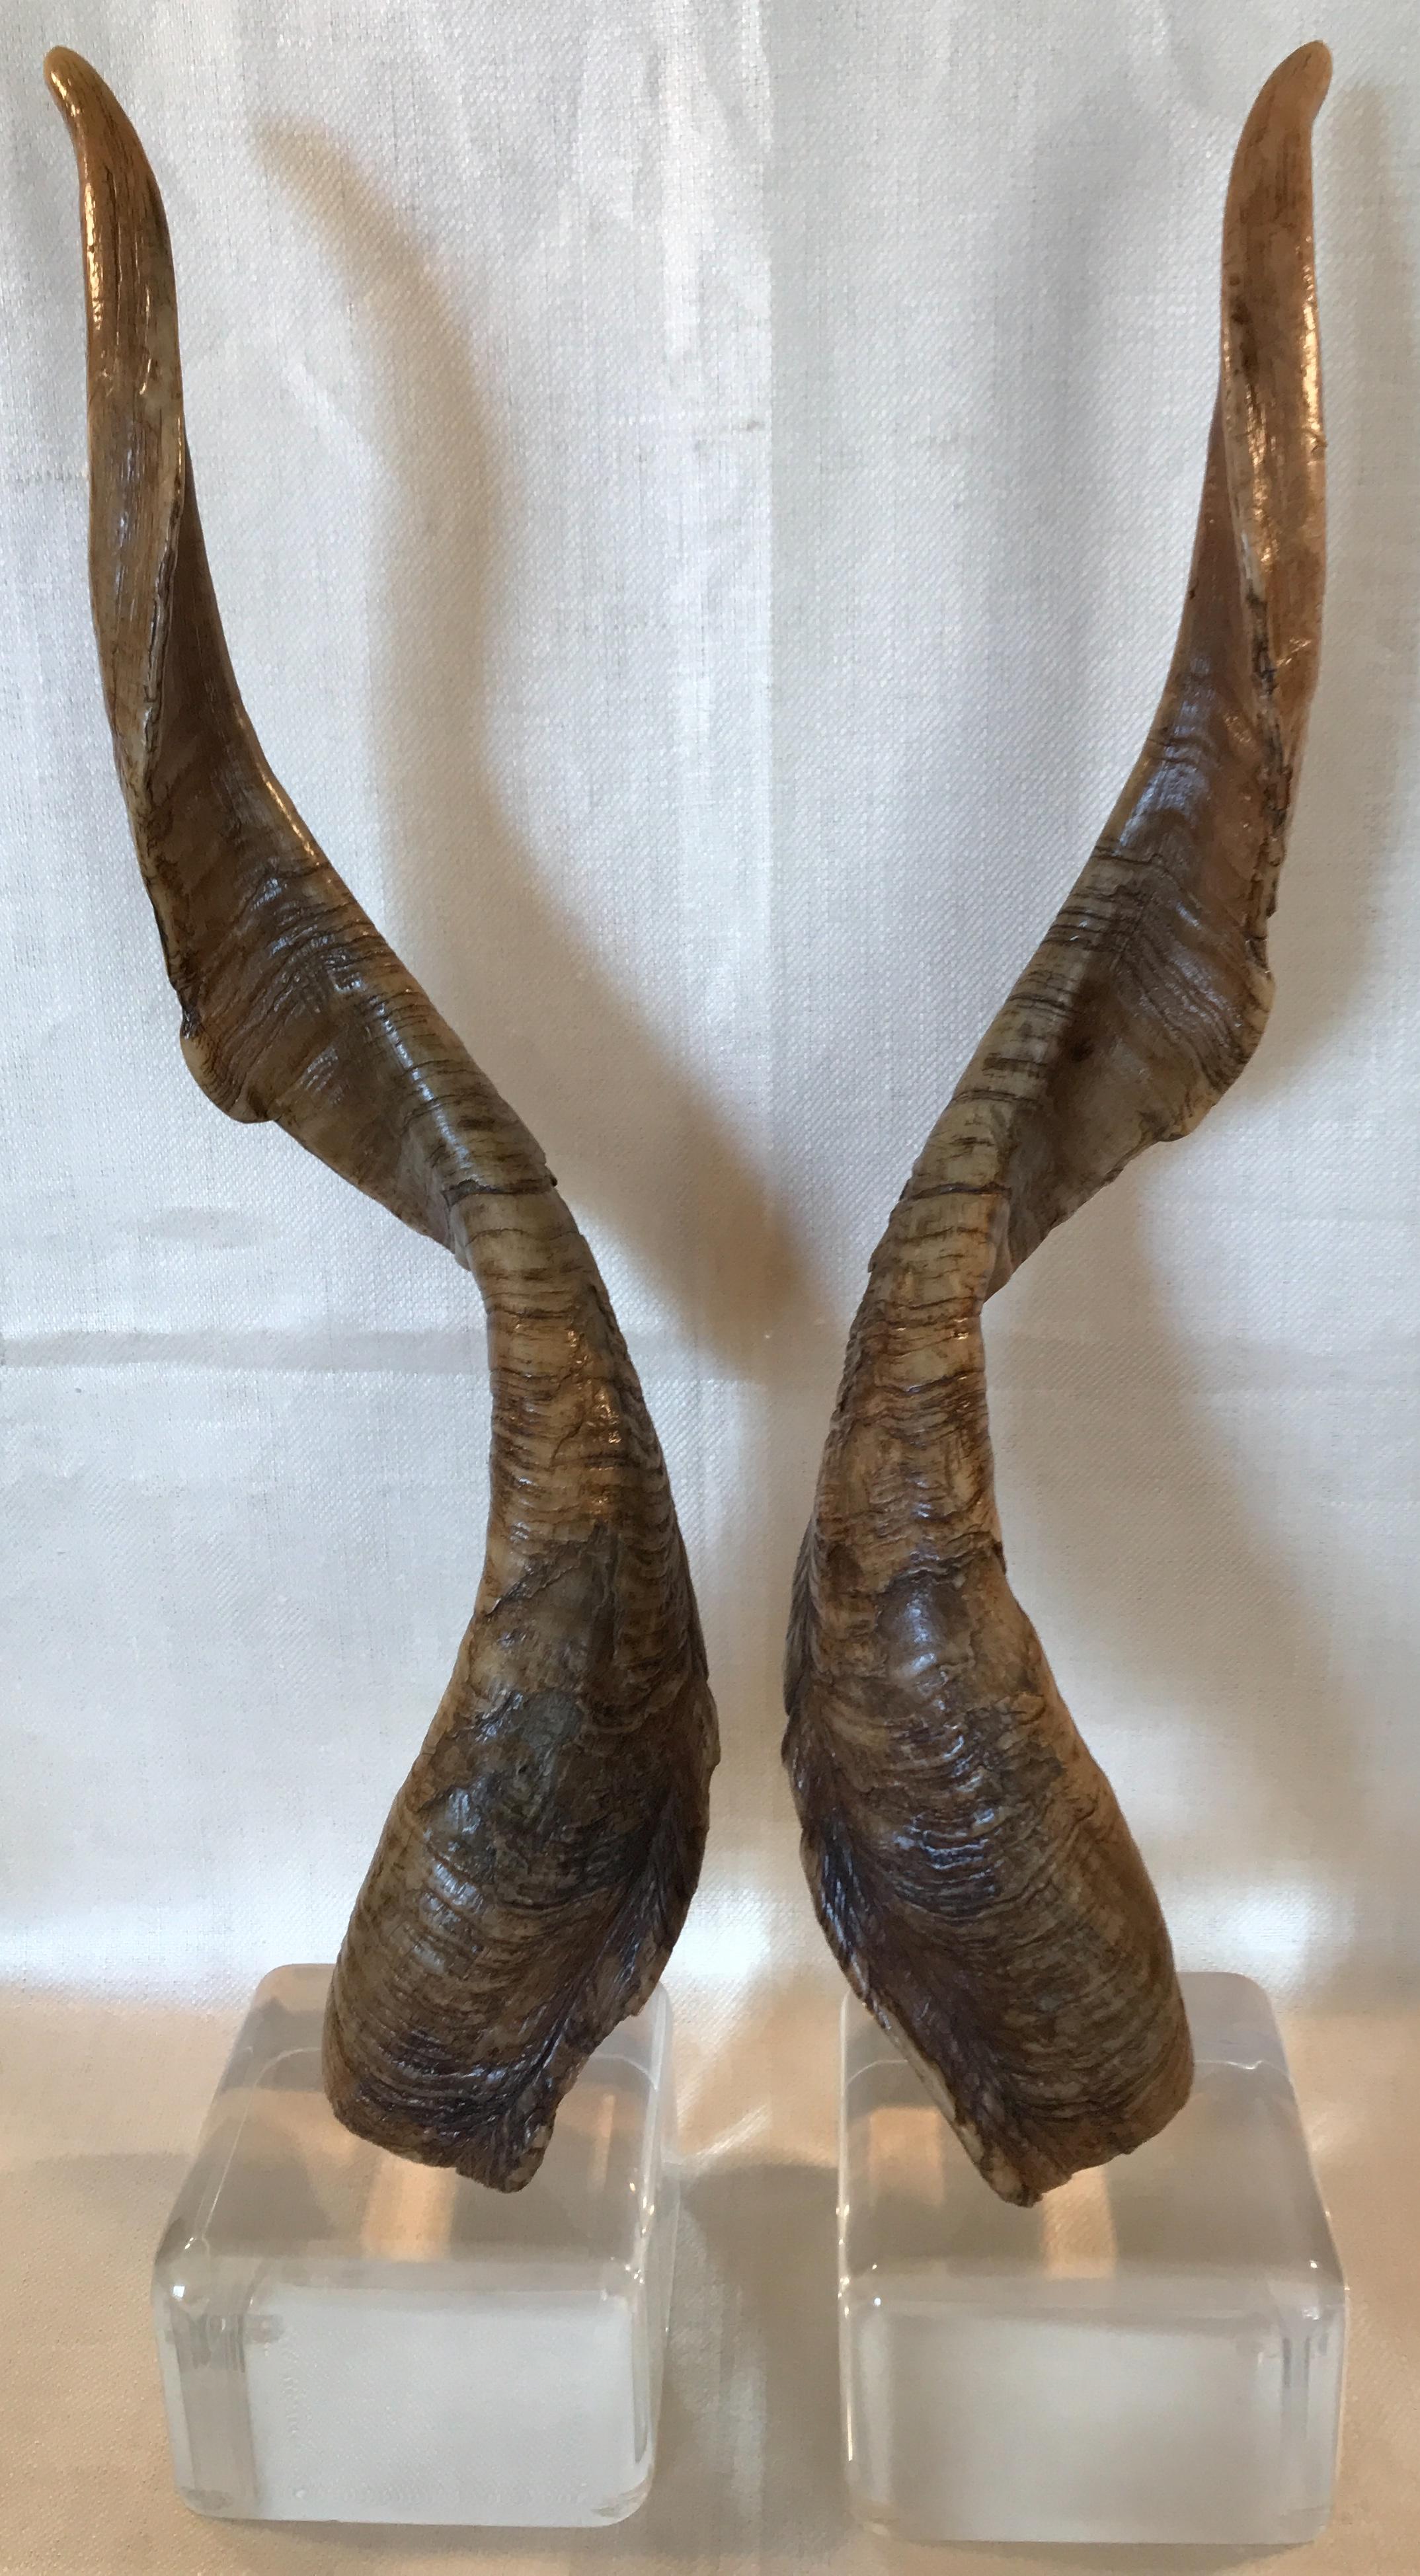 markhor horns for sale